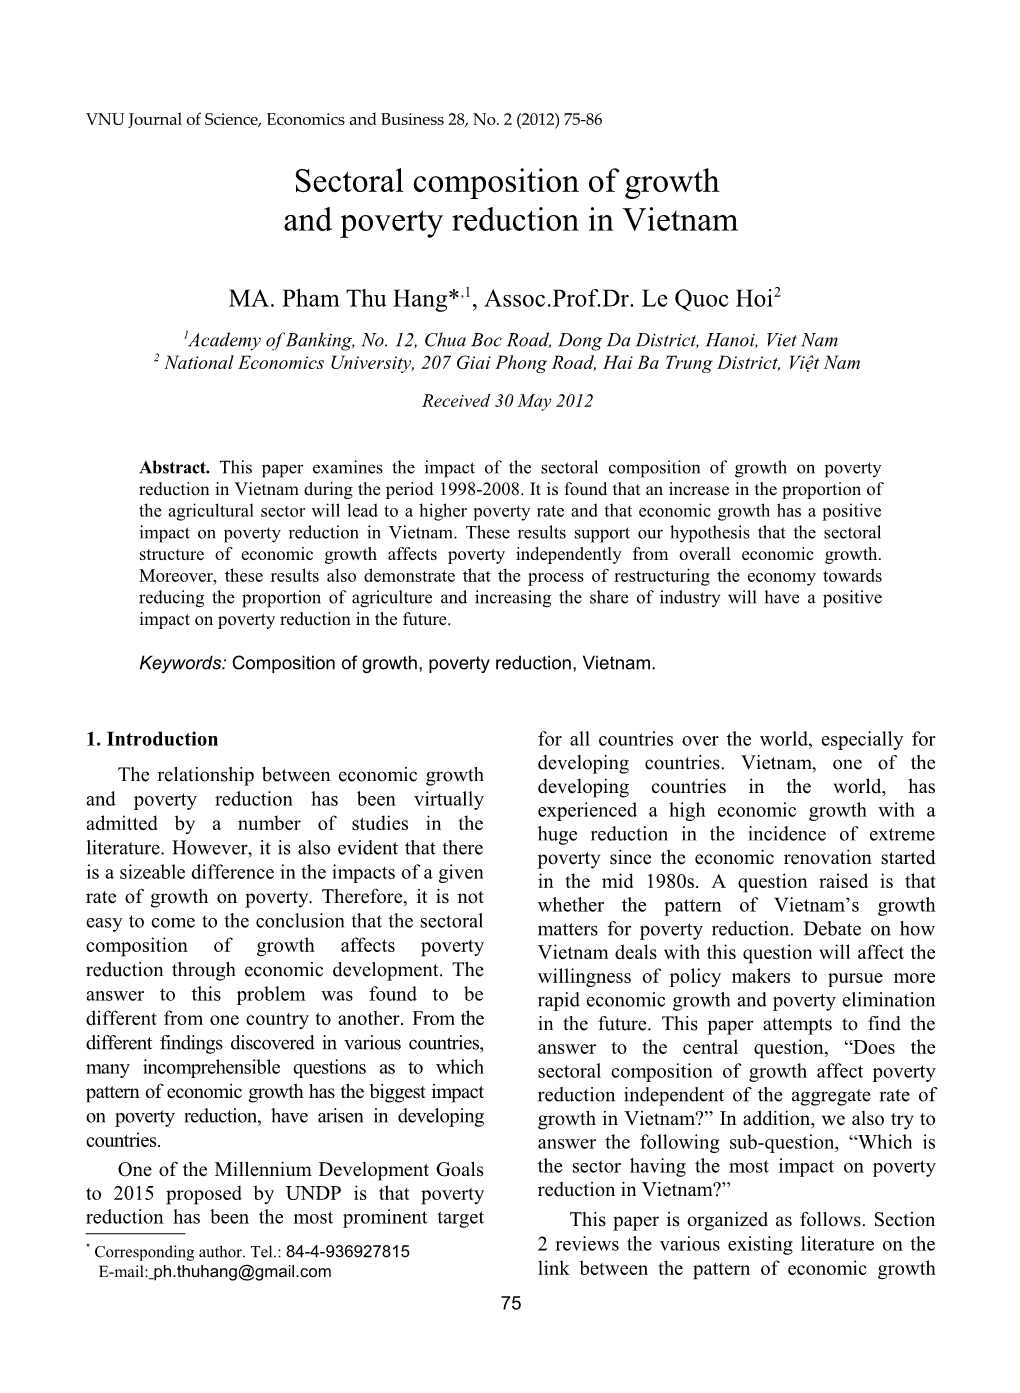 P.T. Hang, L.Q. Hoi / VNU Journal of Science, Economics and Business 28, No. 2 (2012) 75-86